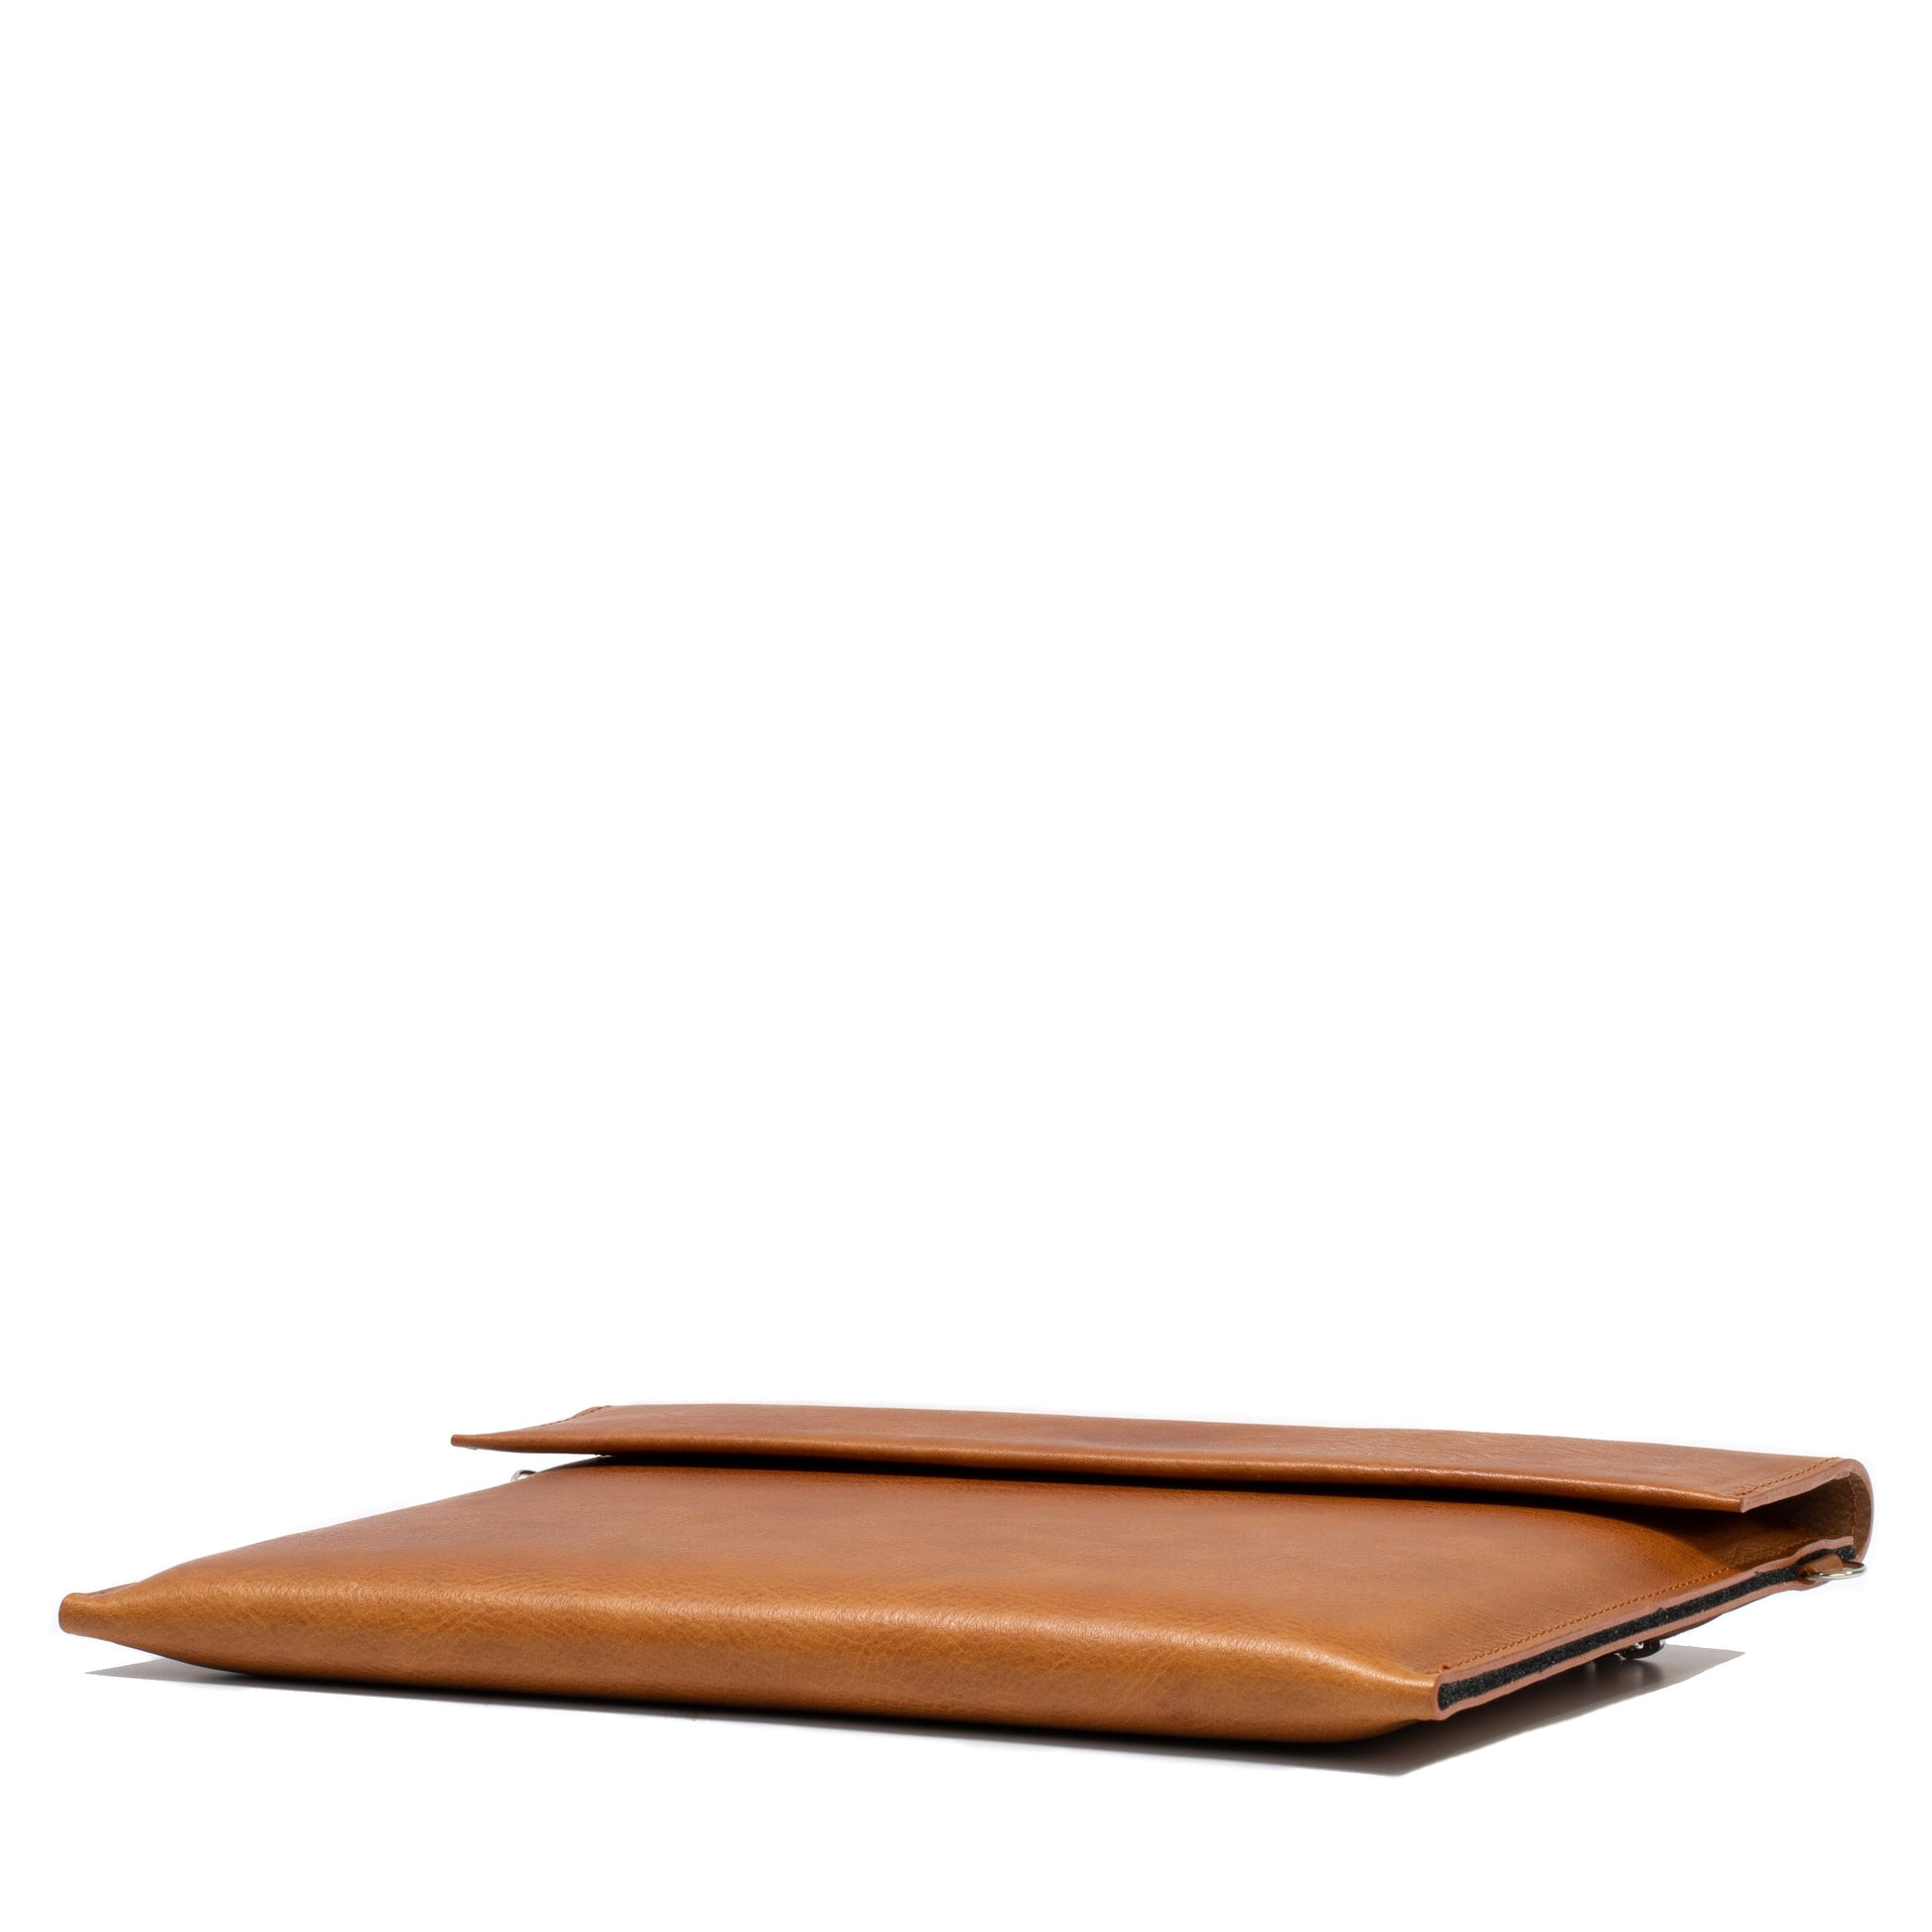 Leather Bag for iPad - The Minimalist 2.0-6